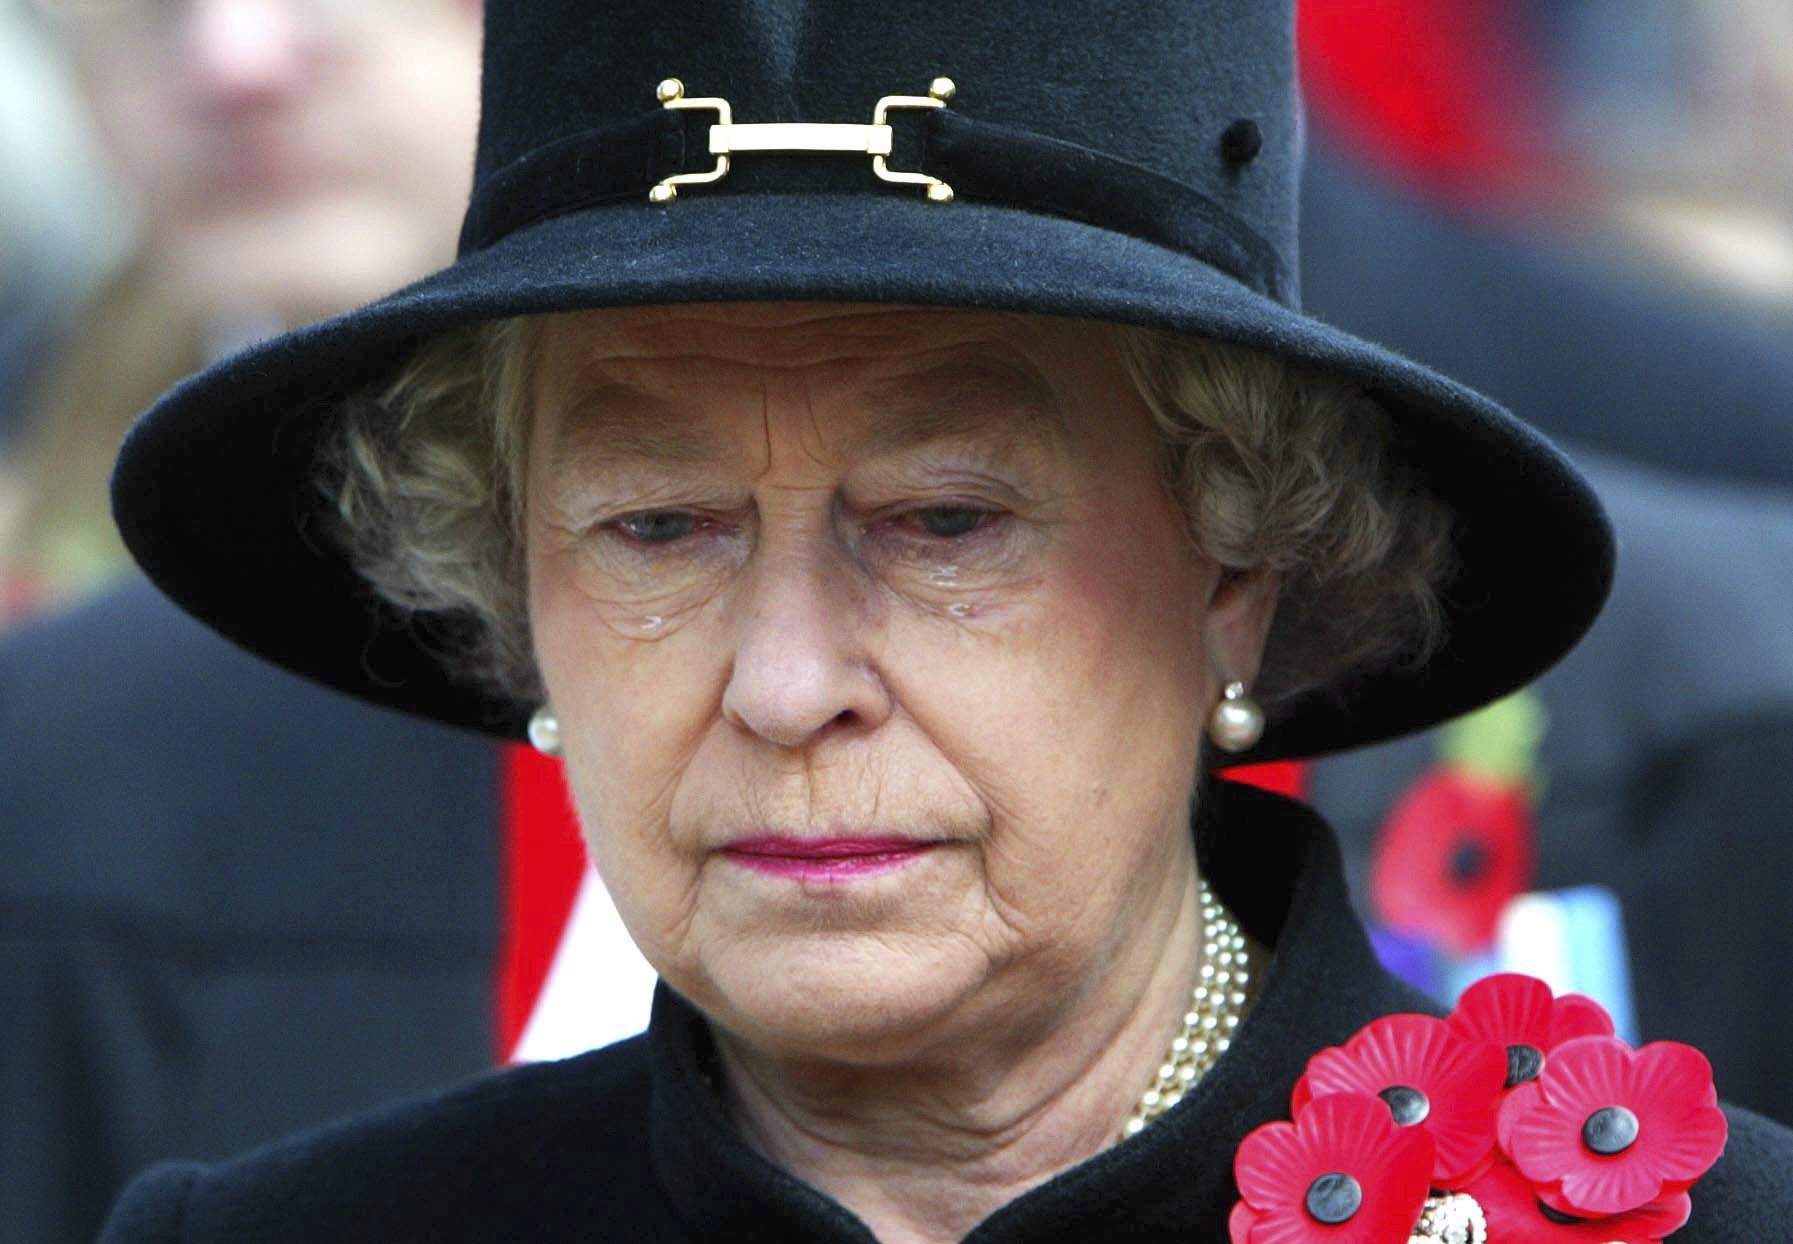 Queen Elizabeth II begins her reign with tears, UPI reports - UPI Archives